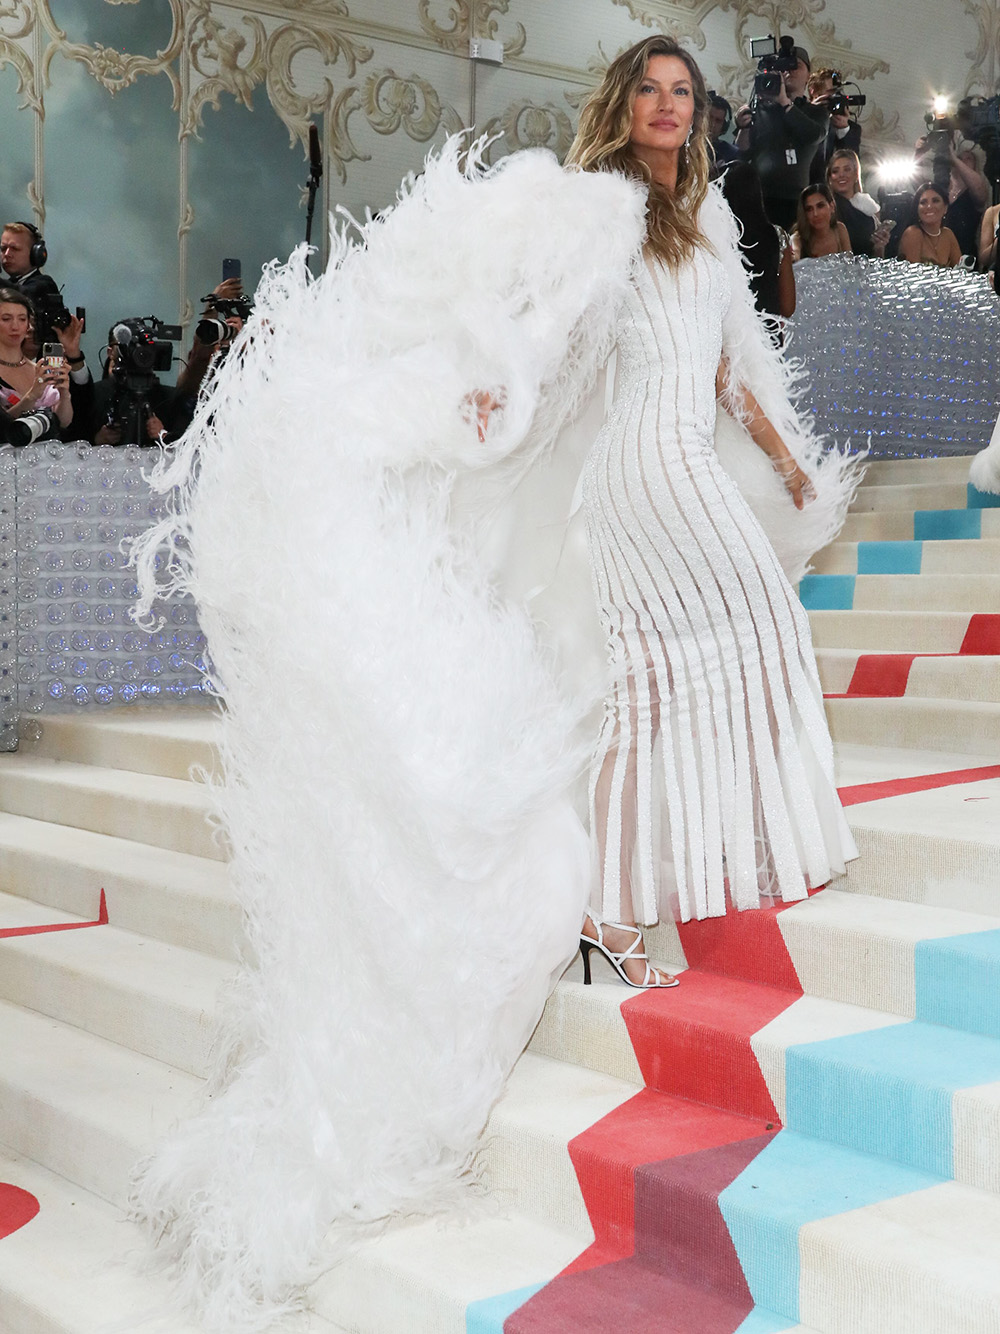 Aubrey Plaza Wears Sleek White Dress with Cutouts to 2023 Met Gala